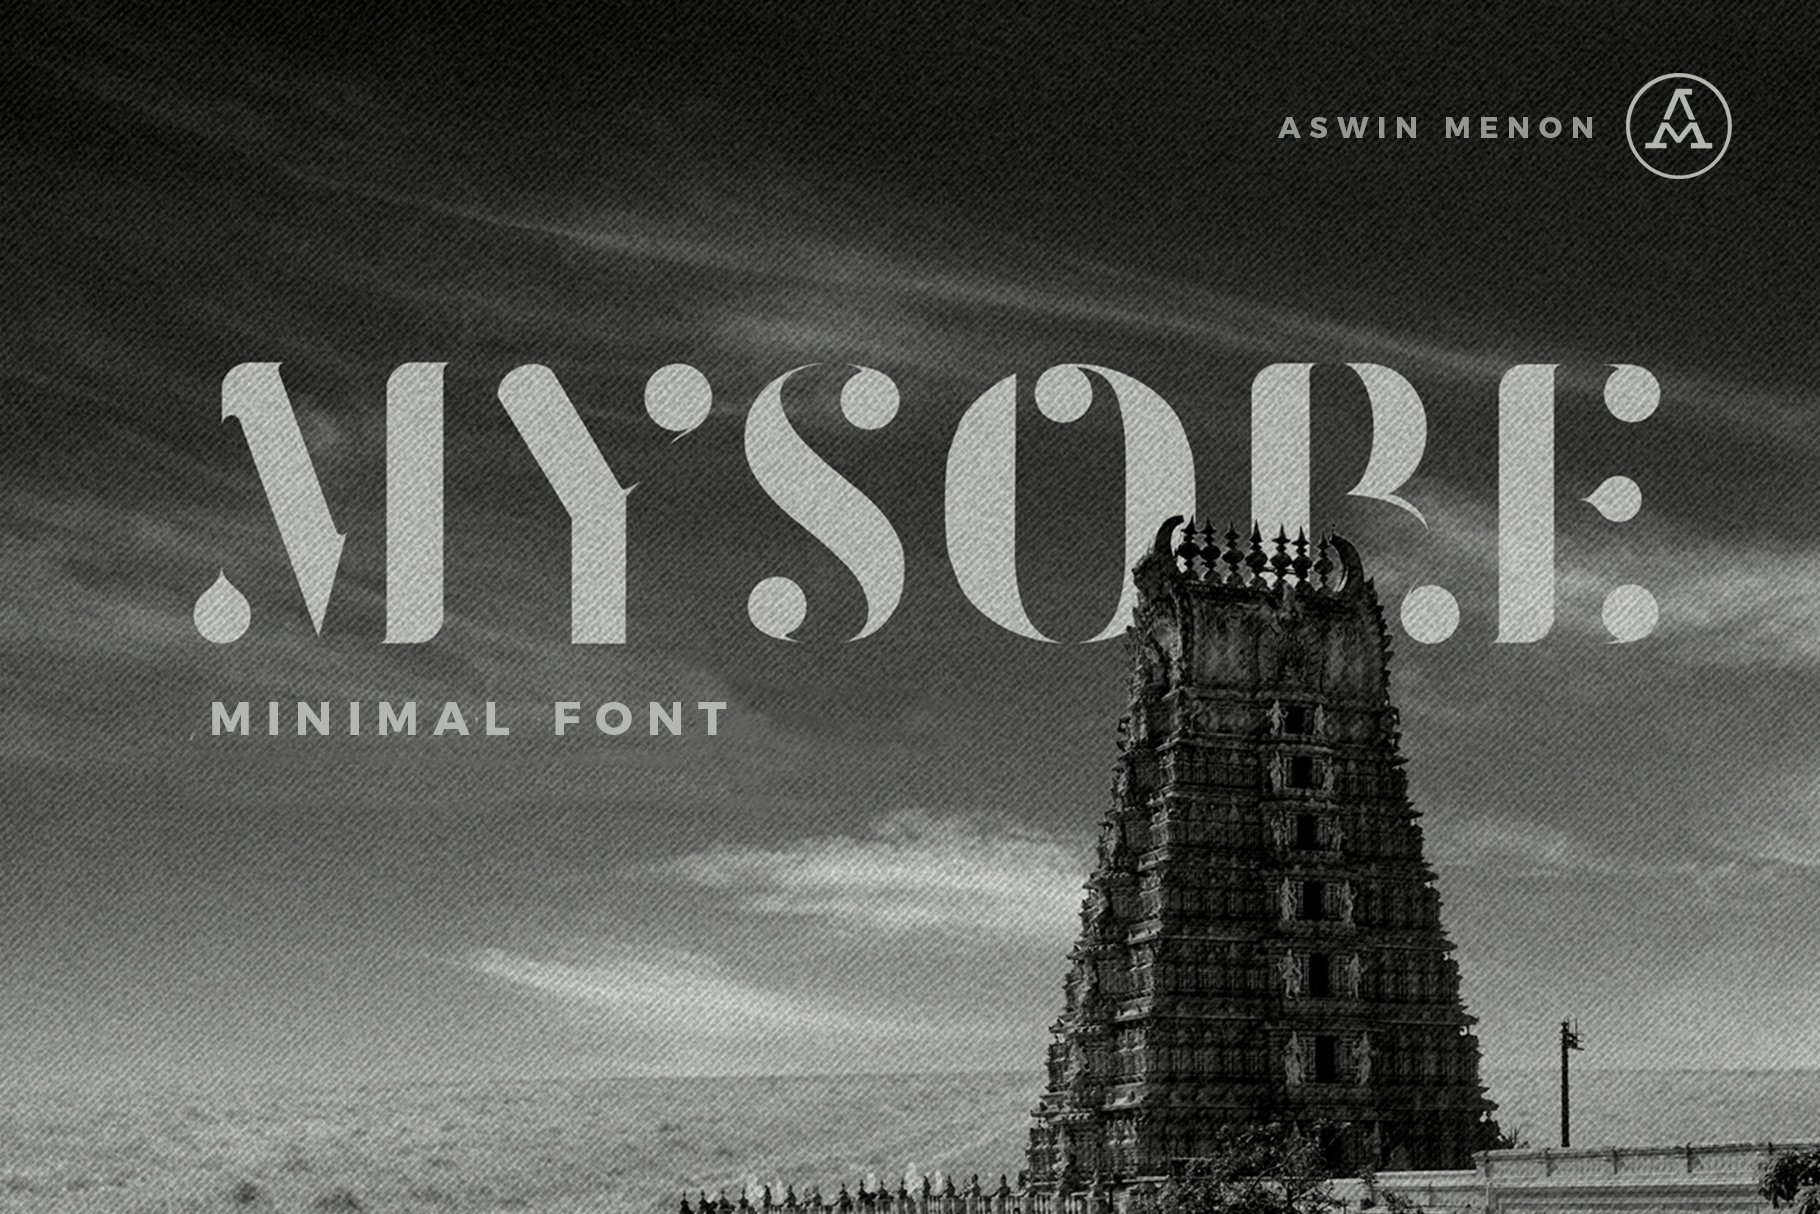 Mysore Font preview image.